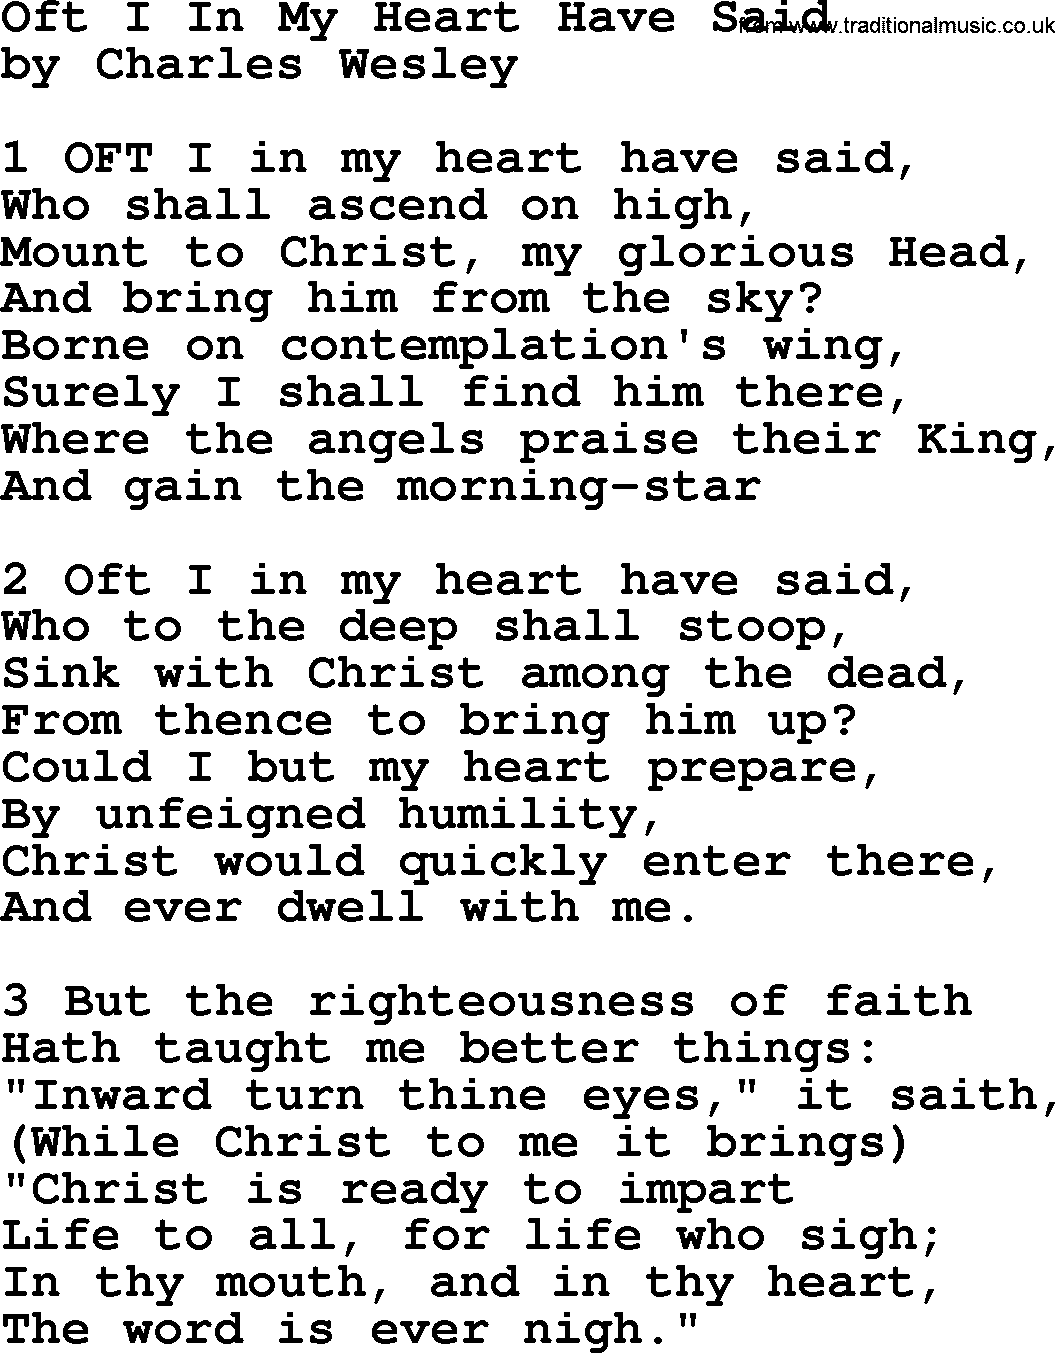 Charles Wesley hymn: Oft I In My Heart Have Said, lyrics